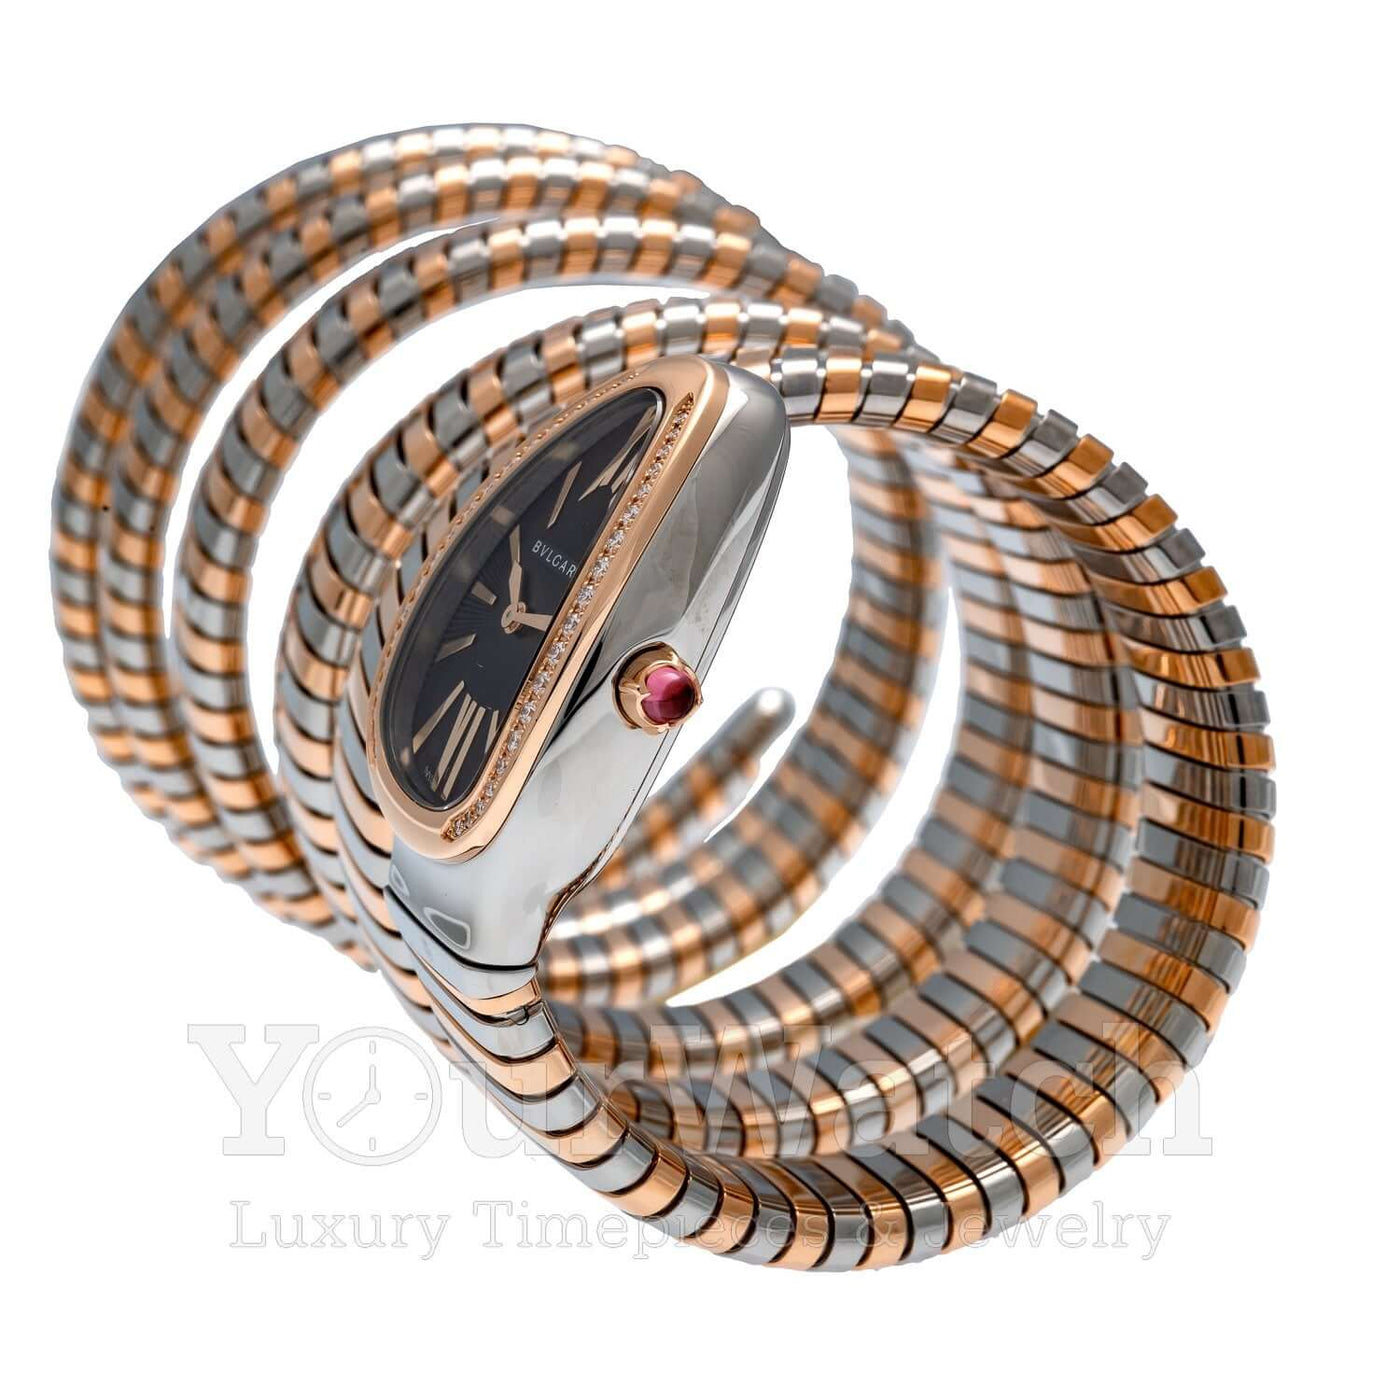 bulgari serpenti 7 coil watch price